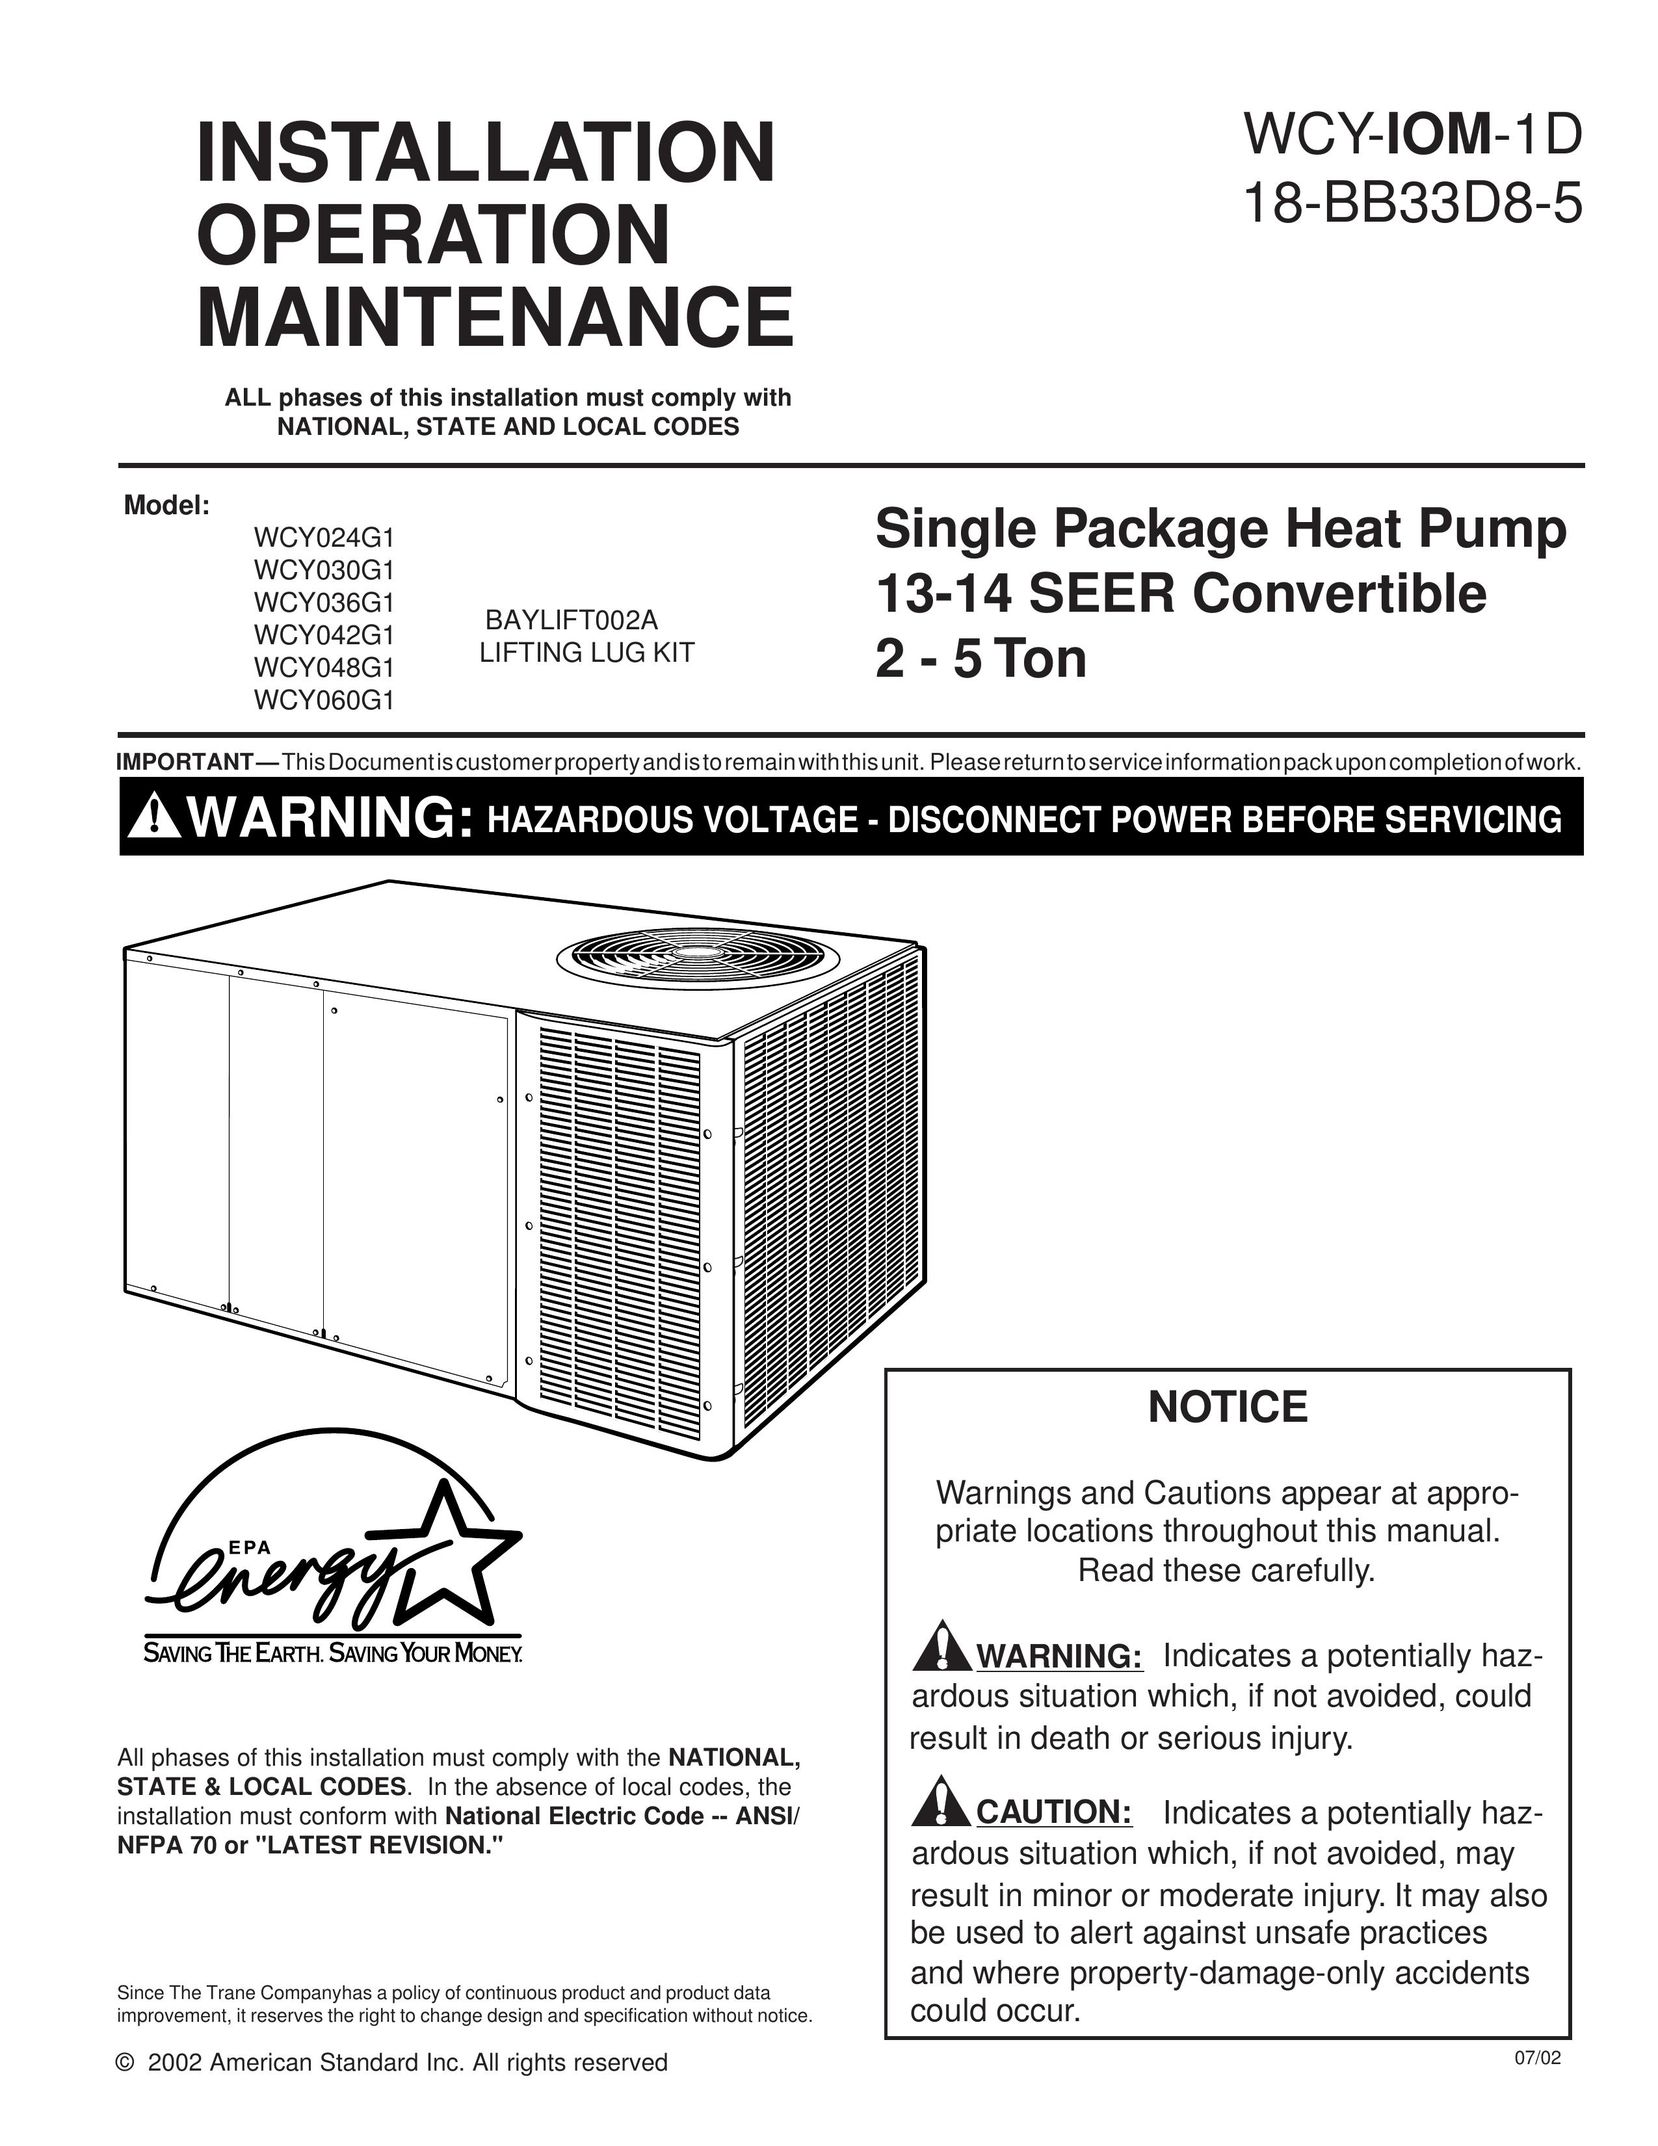 Trane WCY030G1 Heat Pump User Manual